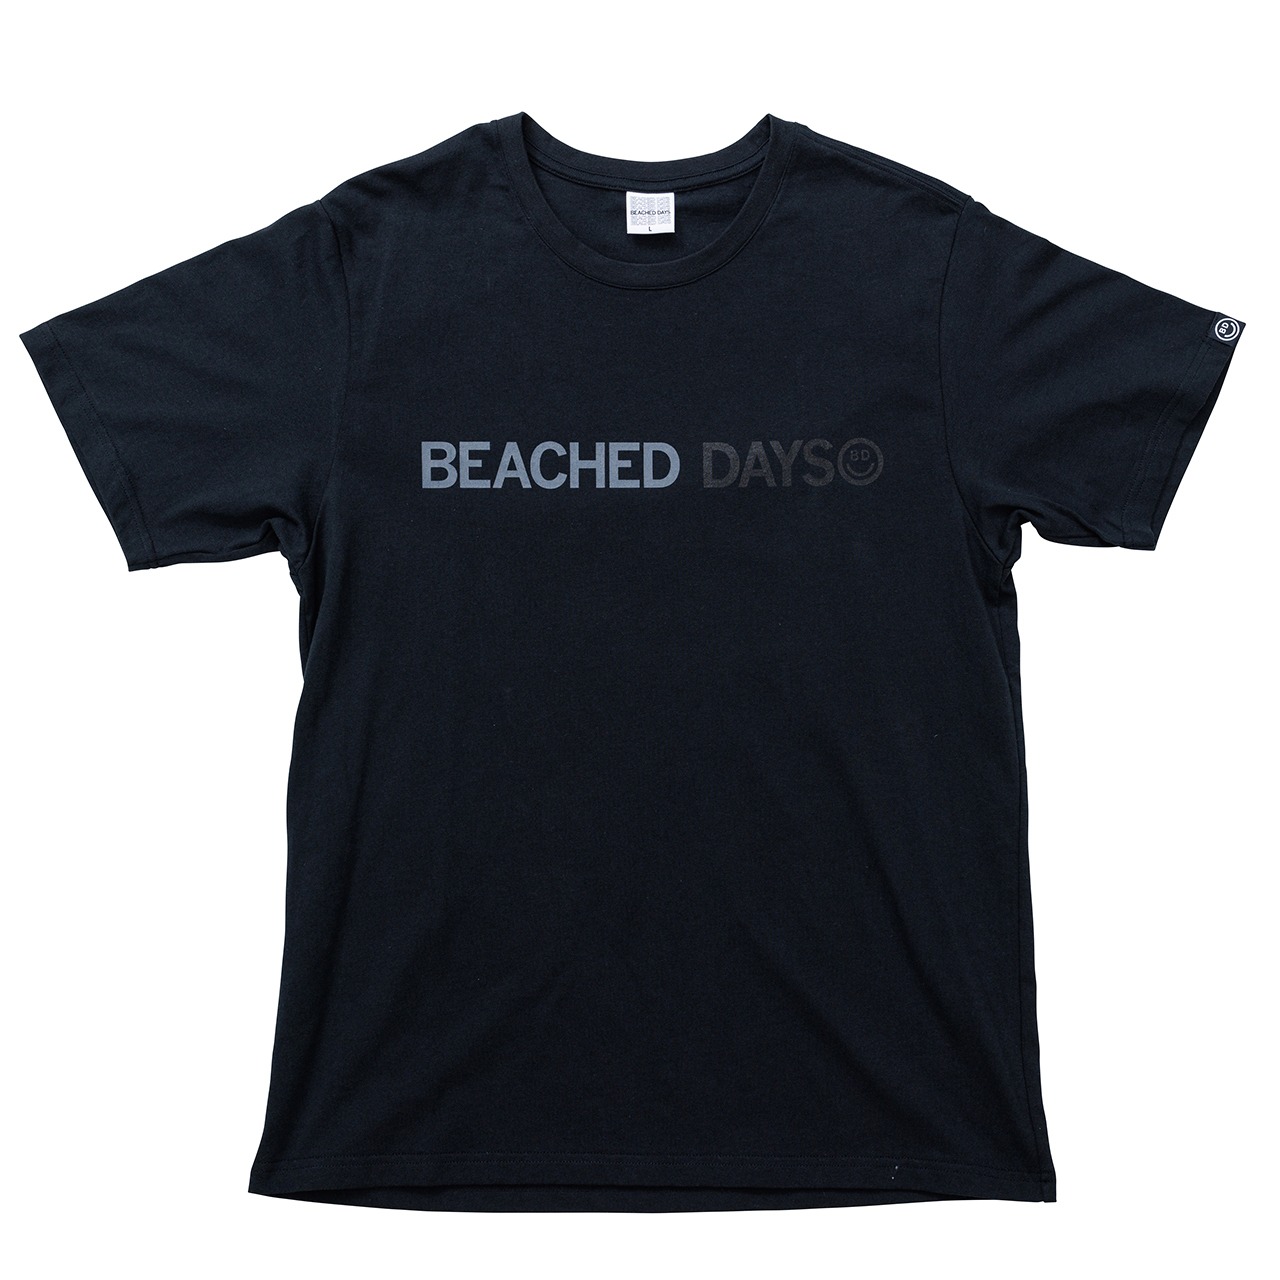 BEACHED DAYS ビーチドデイズ / 2トーン ロゴTee